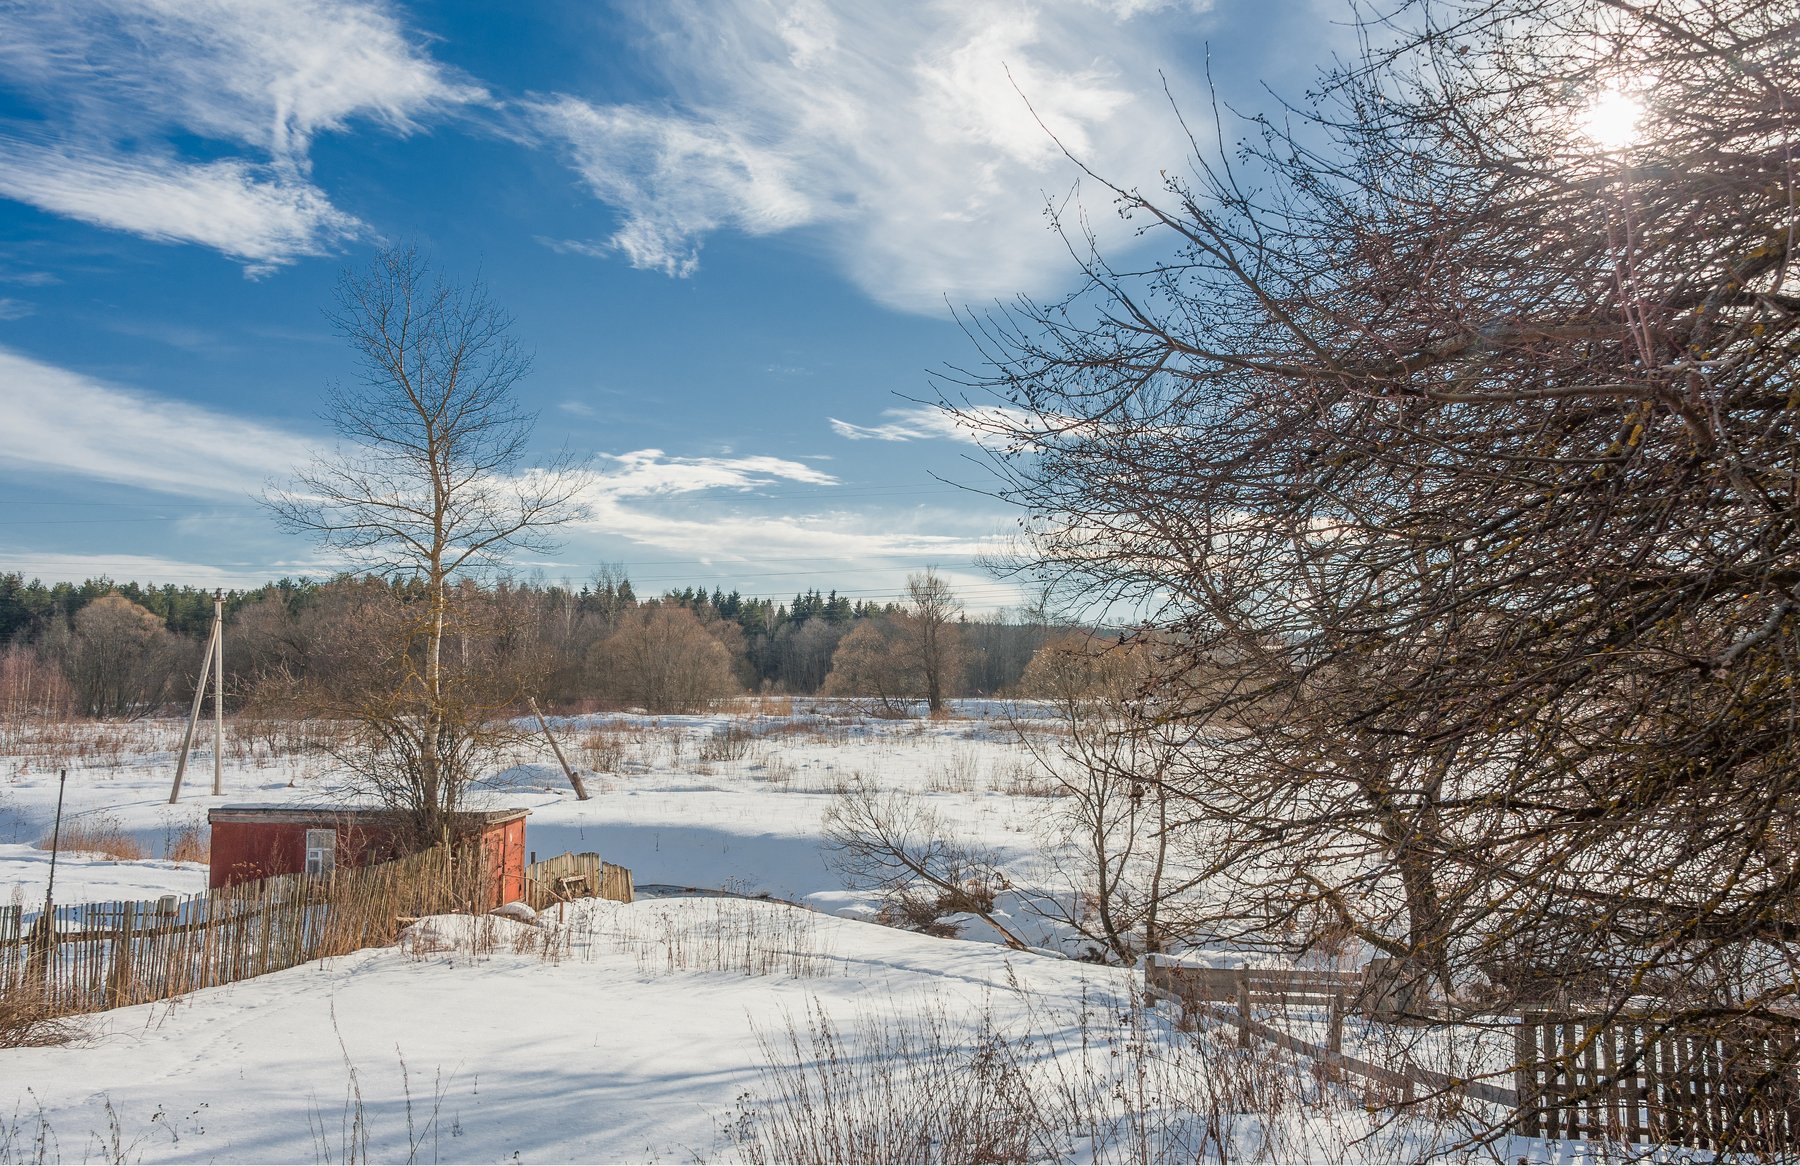 зима февраль месяц деревня околица забор сарай река берег снег столб провода лес деревья небо облака солнце сквозь ветки, Валерий